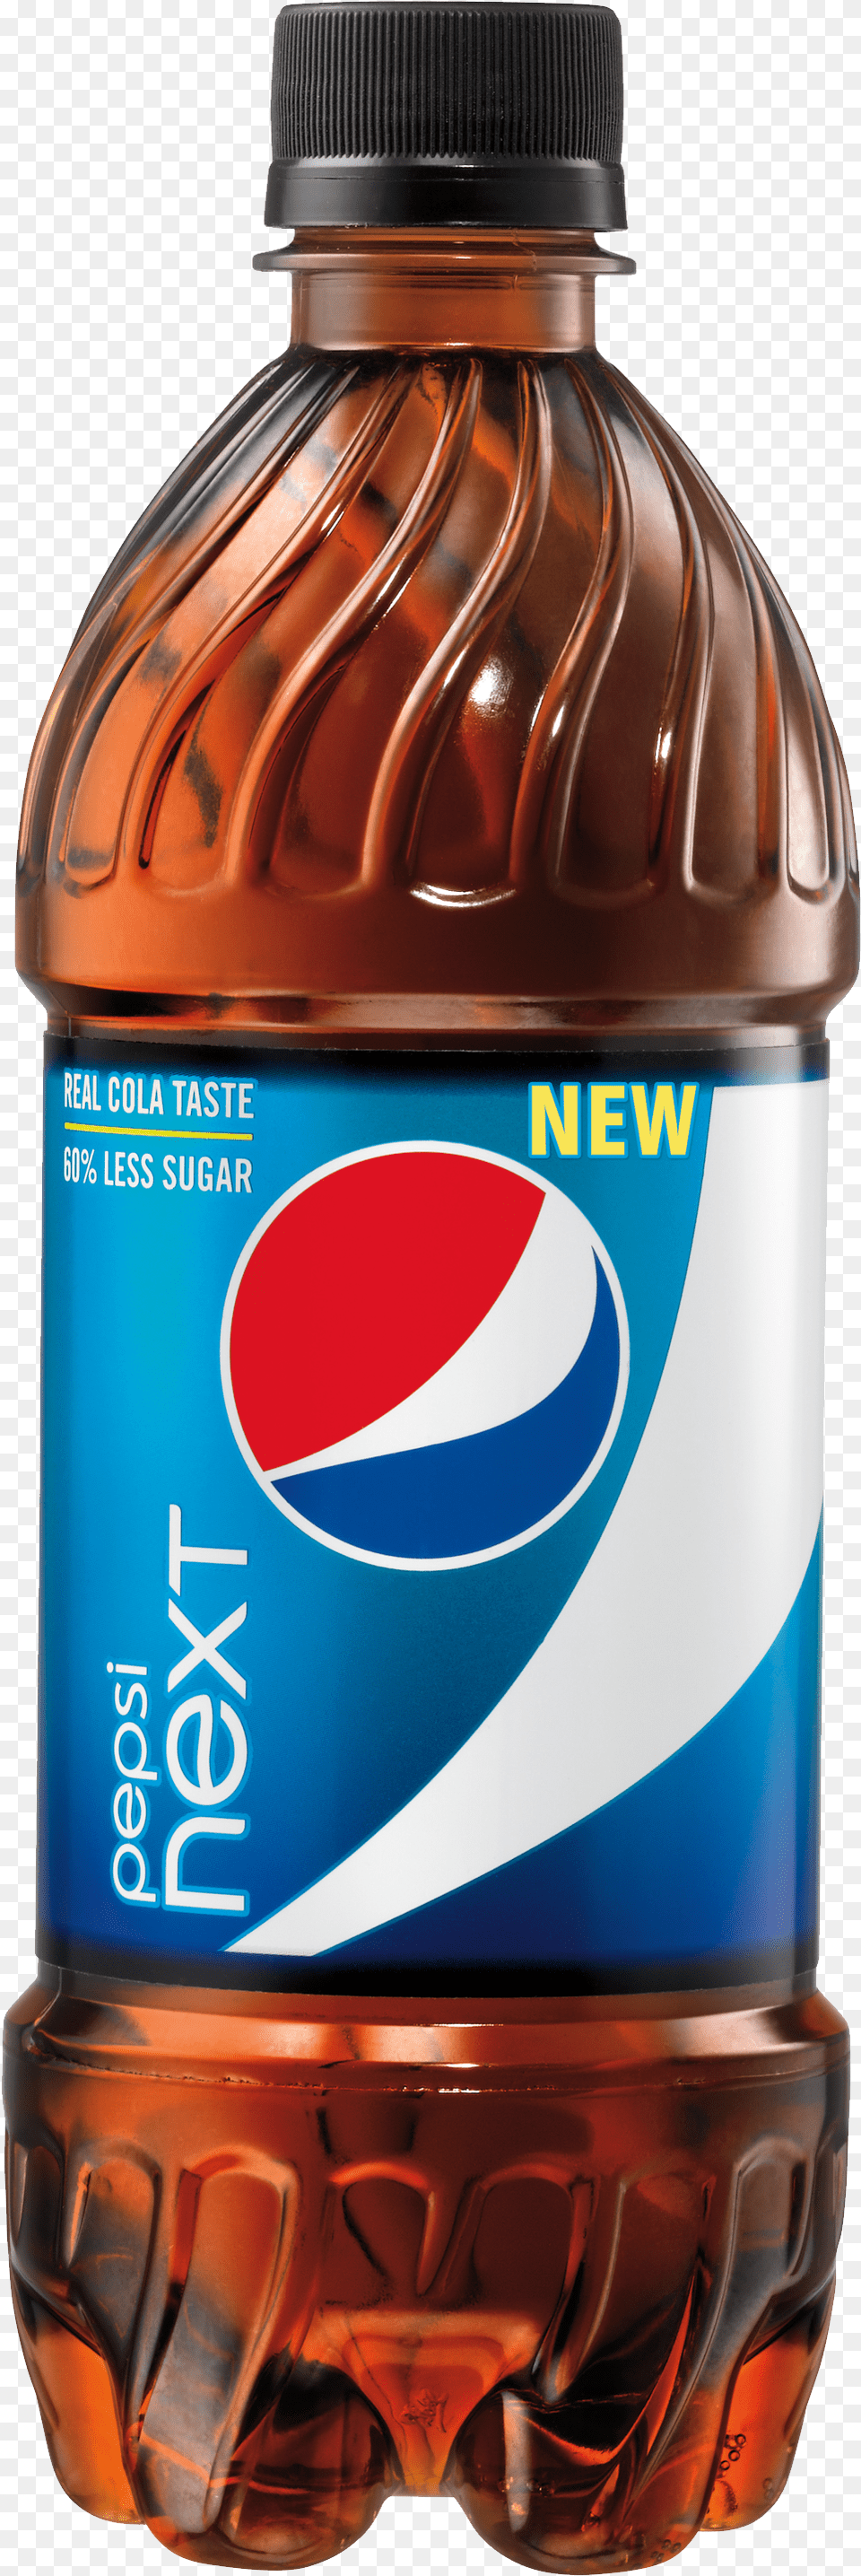 Pepsi Bottle Can Images Download Pepsi Next, Beverage, Soda, Shaker Free Transparent Png